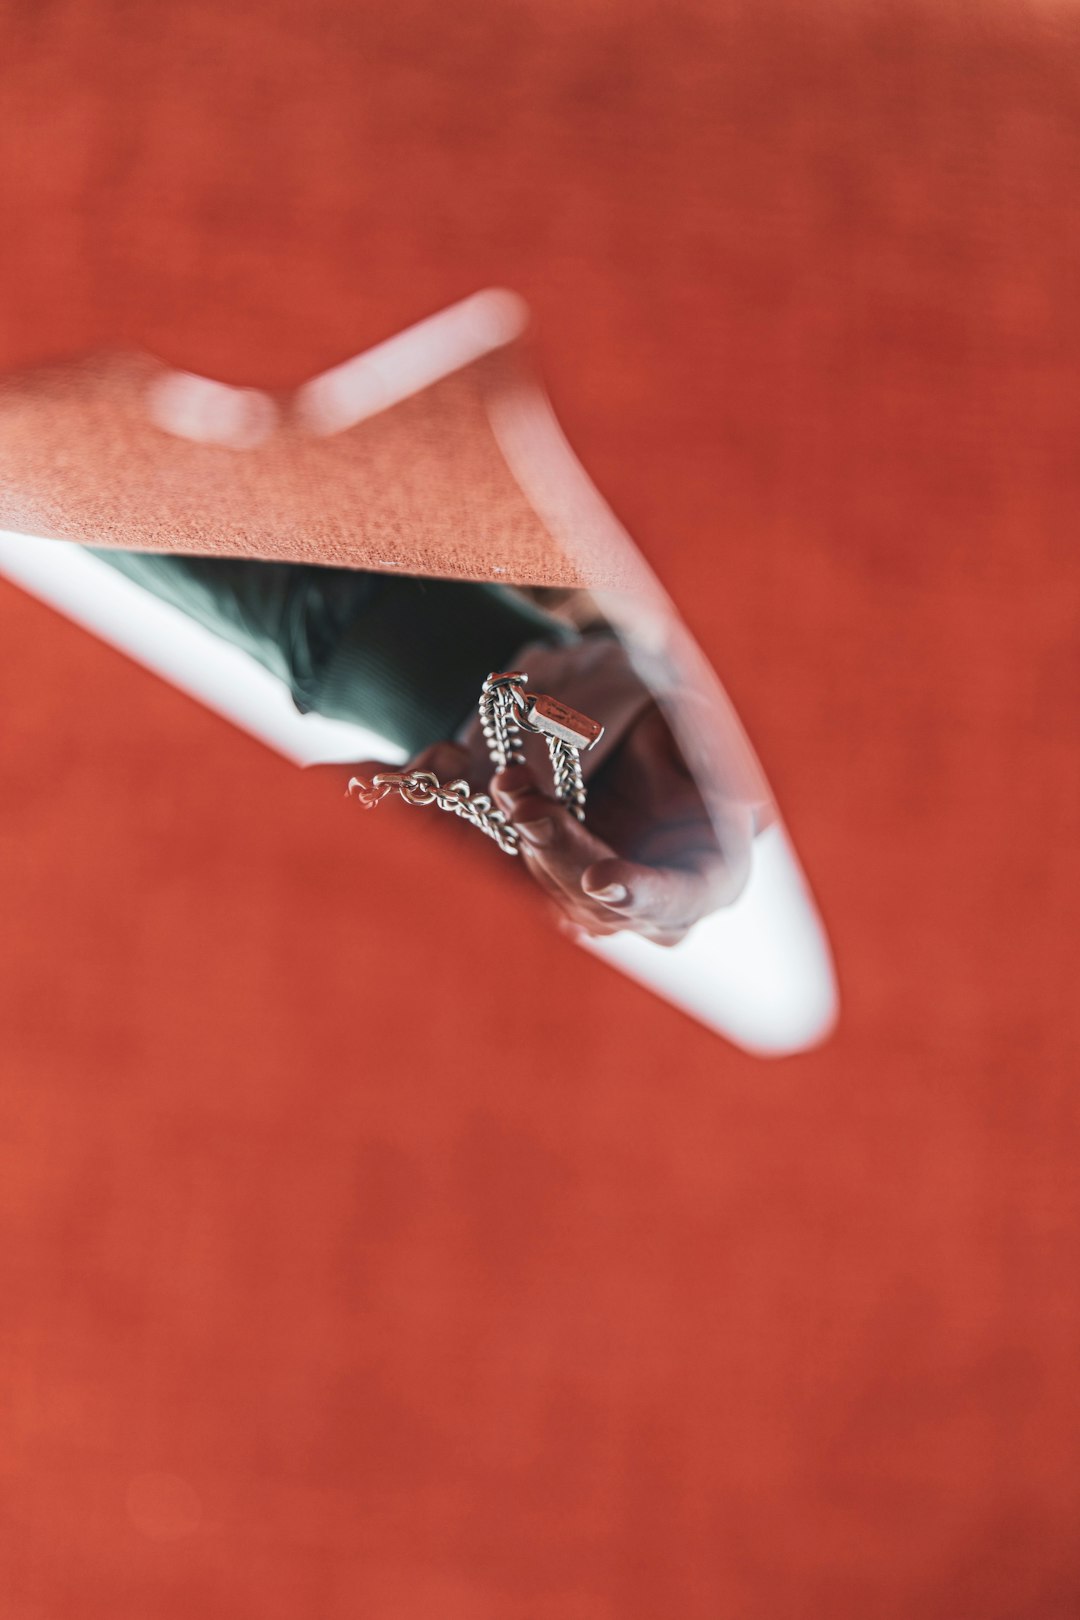 silver diamond studded ring on white ceramic plate